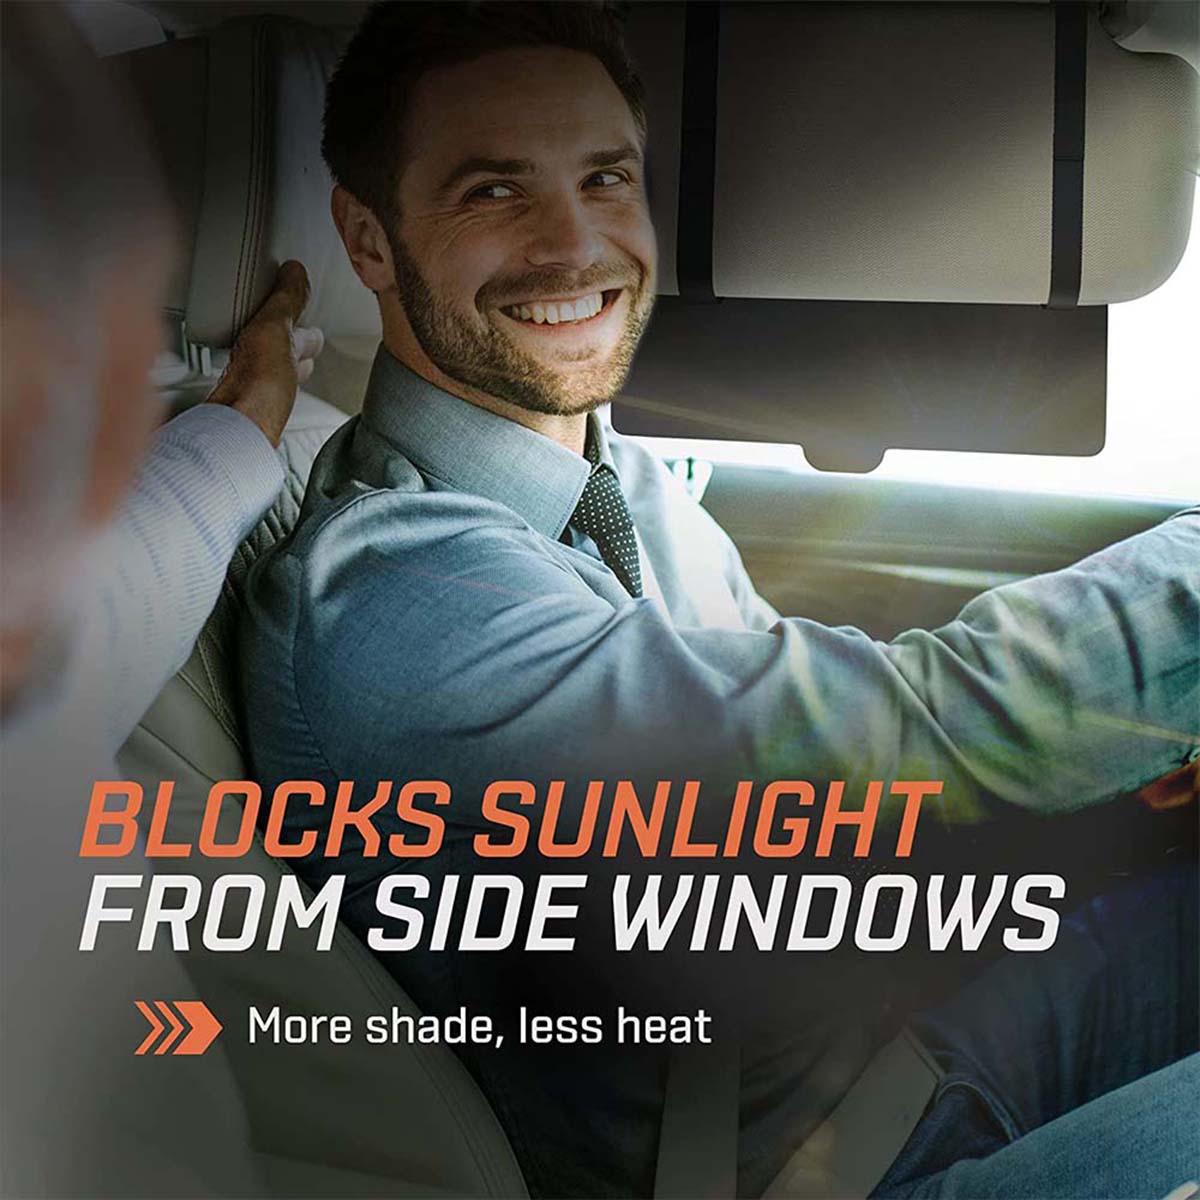 Polarized Sun Visor Sunshade Extender for Car with Polycarbonate Lens, Custom For Your Cars, Anti-Glare Car Sun Visor Protects from Sun Glare, Snow Blindness, UV Rays, Universal for Cars, SUVs CH13999